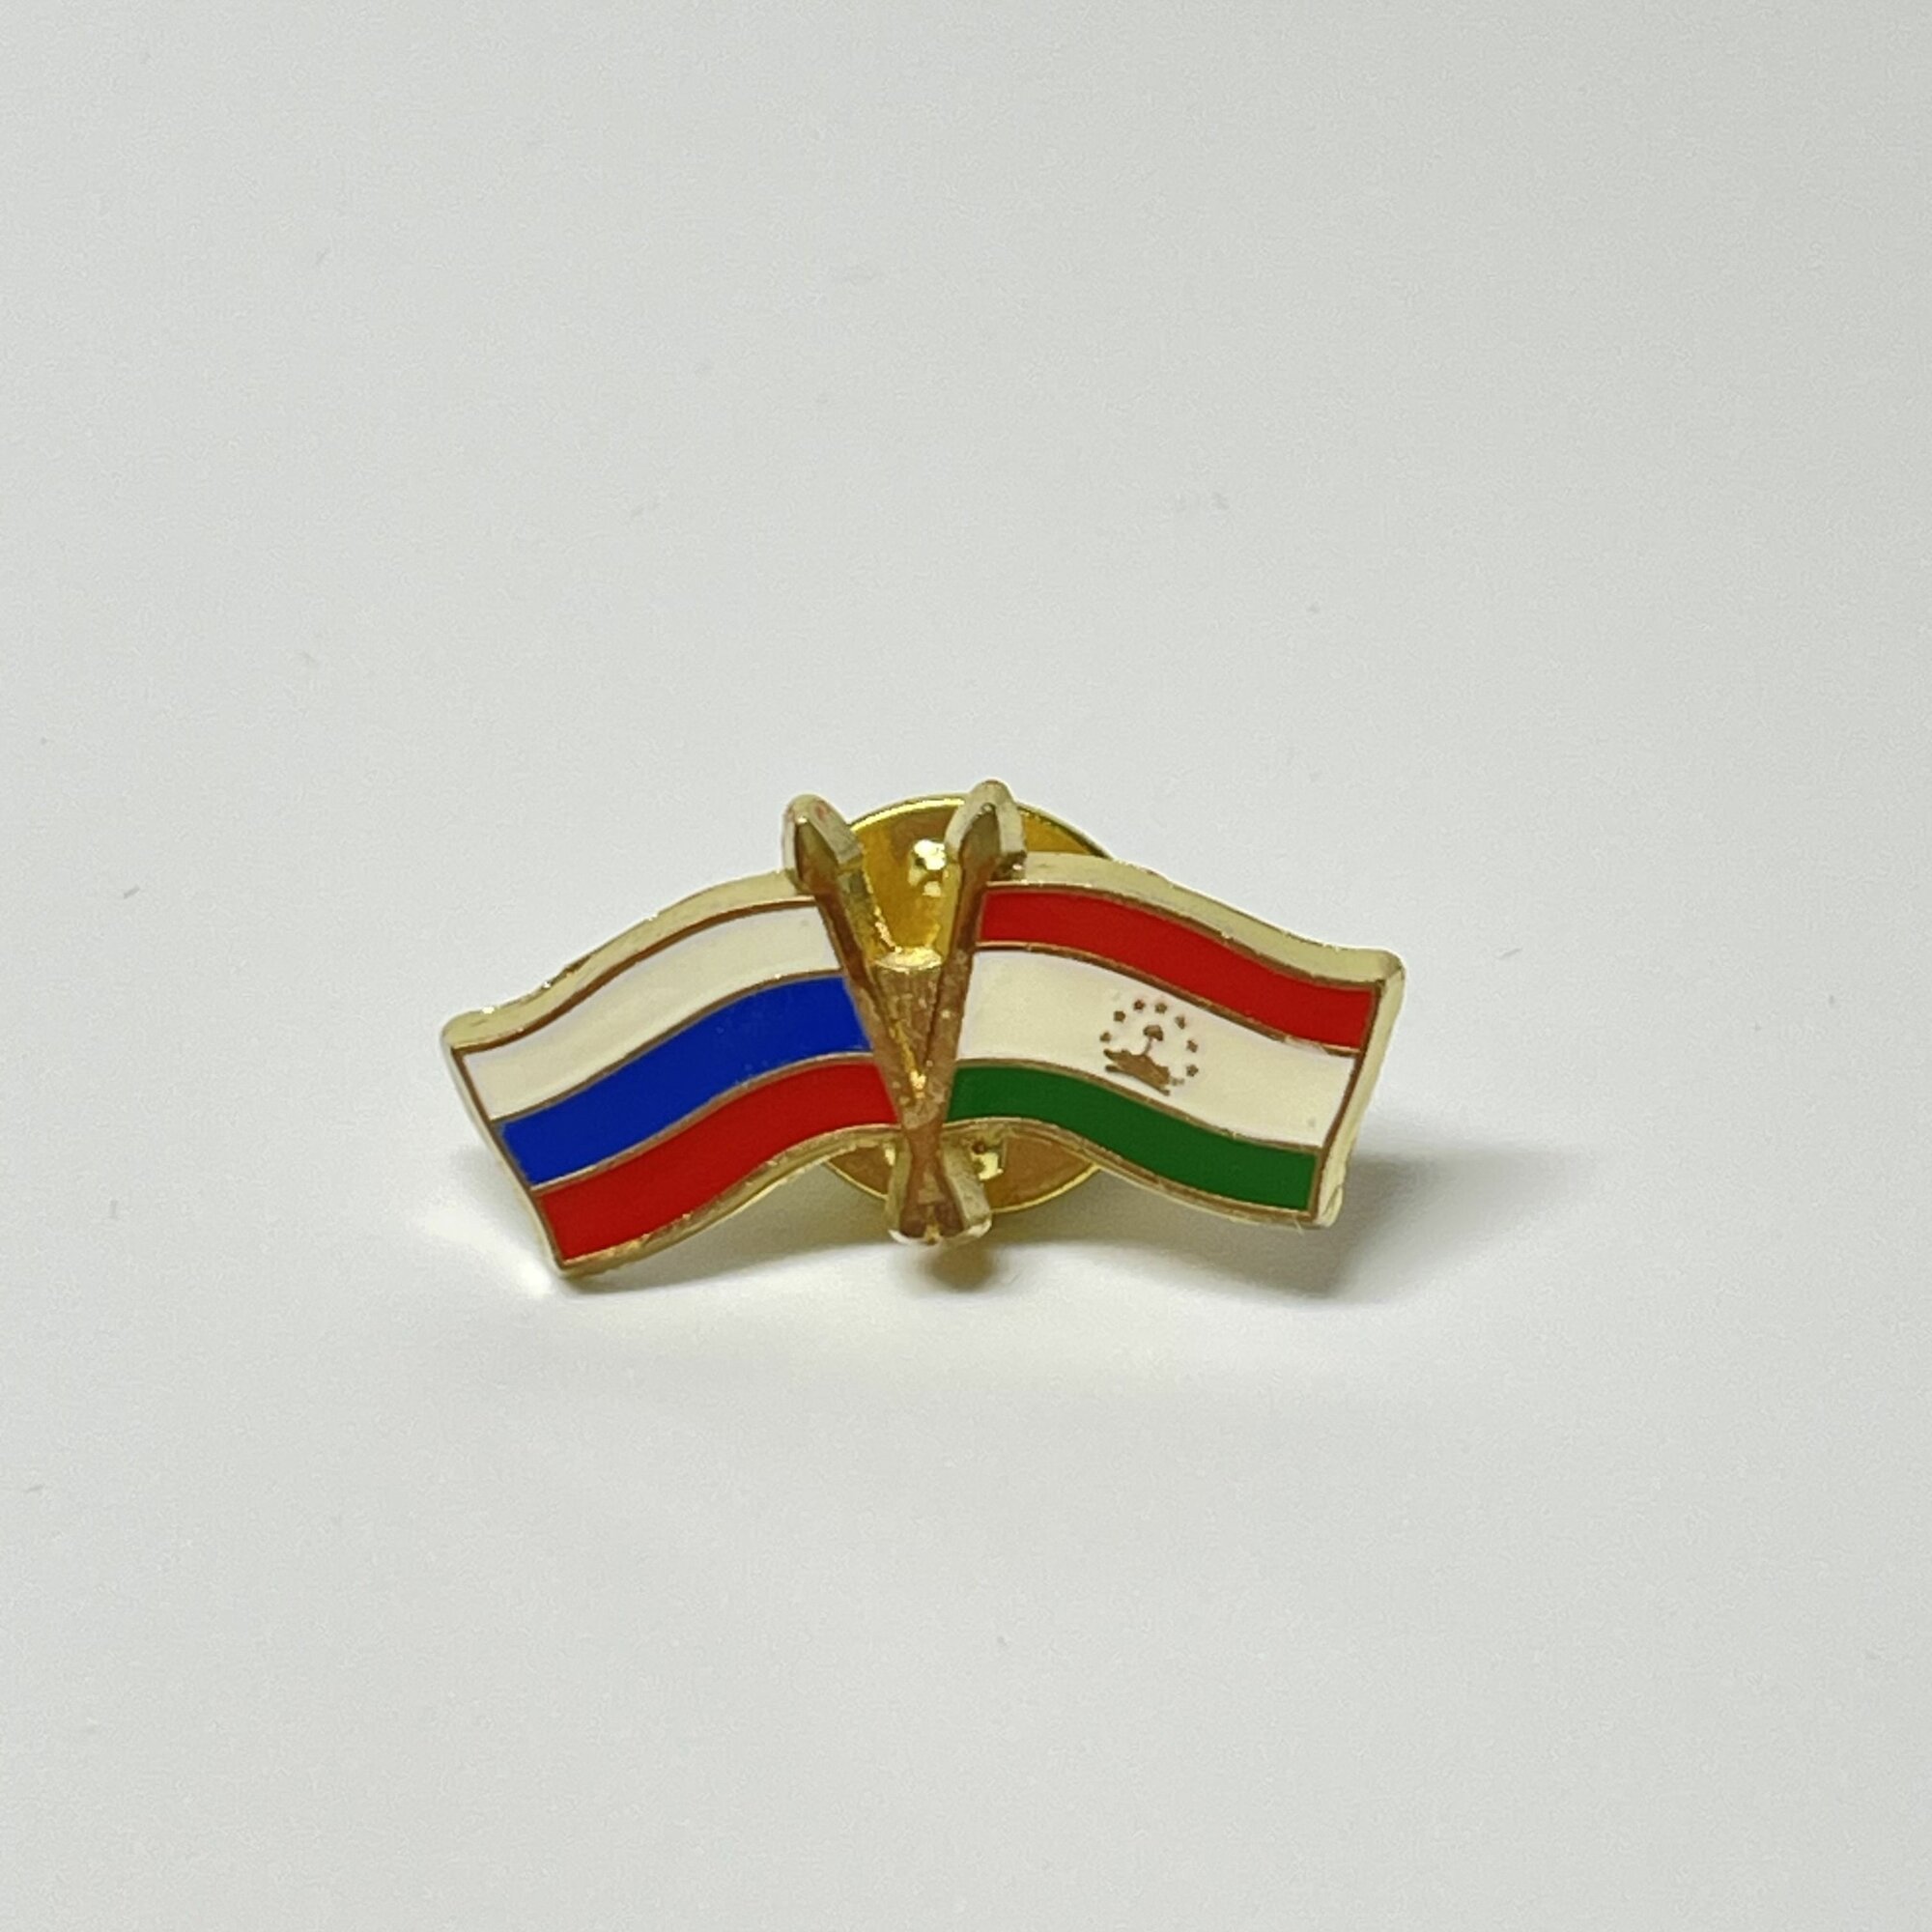 Значок на лацкан пиджака "Флаг Таджикистан - Россия", сувенир на праздник